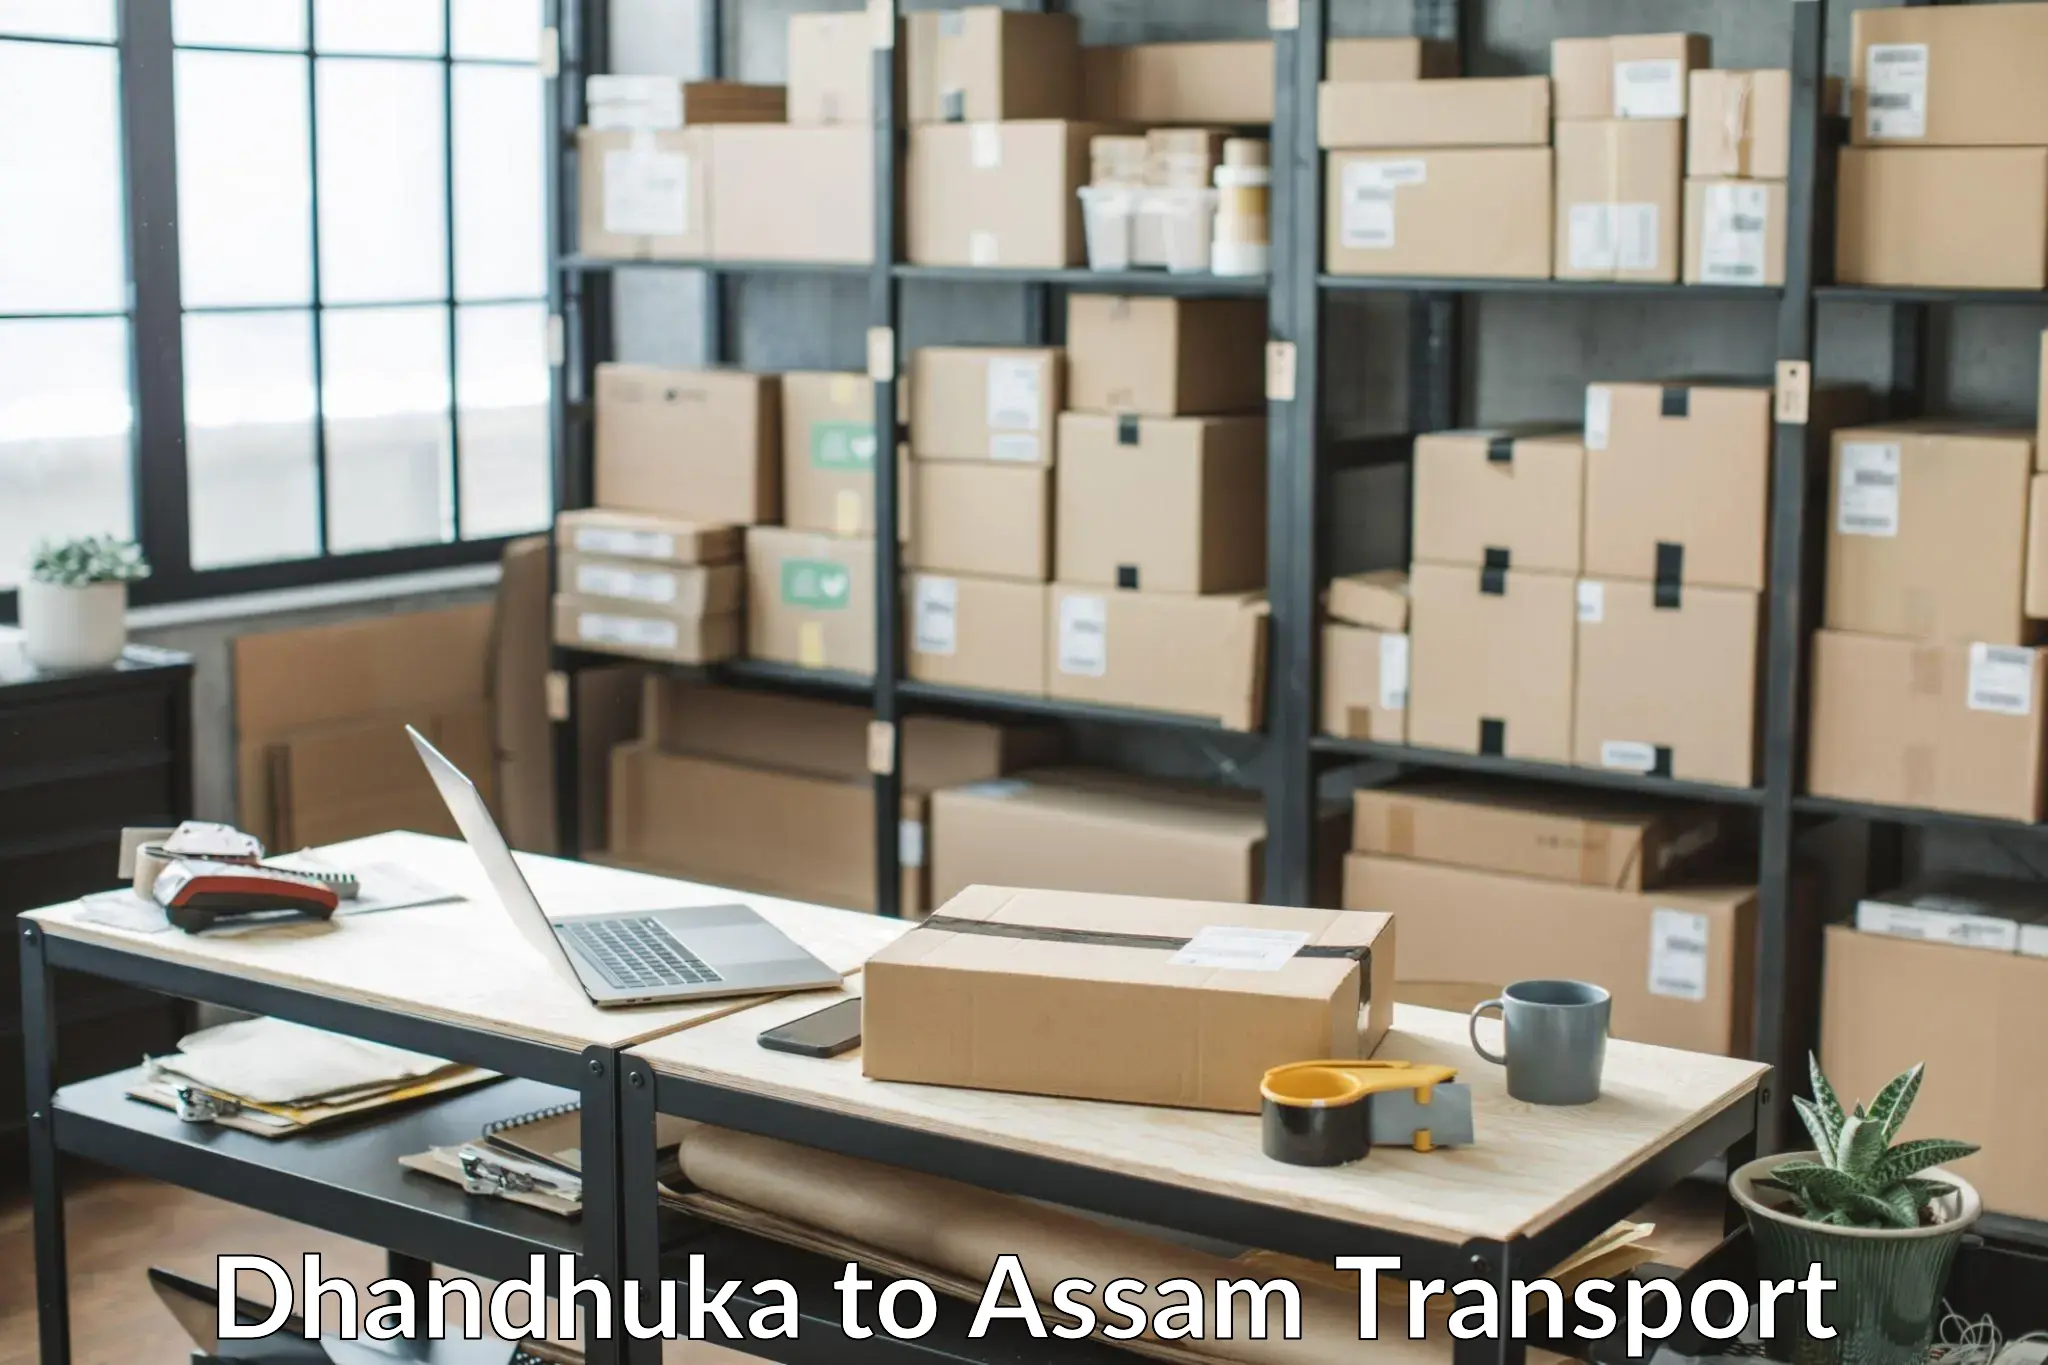 Lorry transport service Dhandhuka to Lala Assam